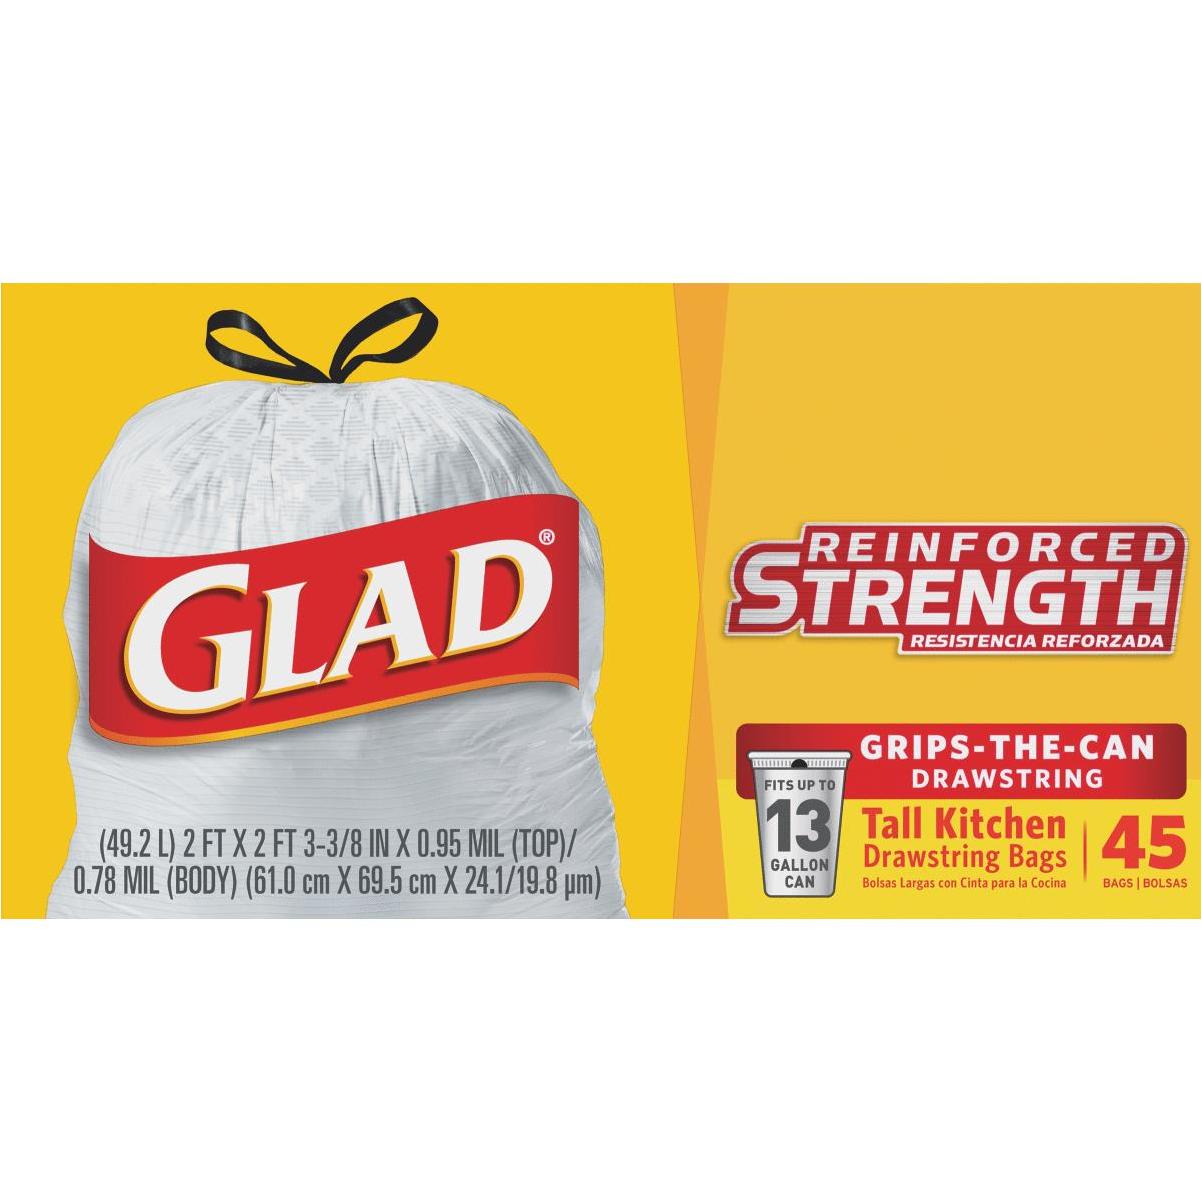 Glad ForceFlex 13-Gallon Trash Bags, 45-Count